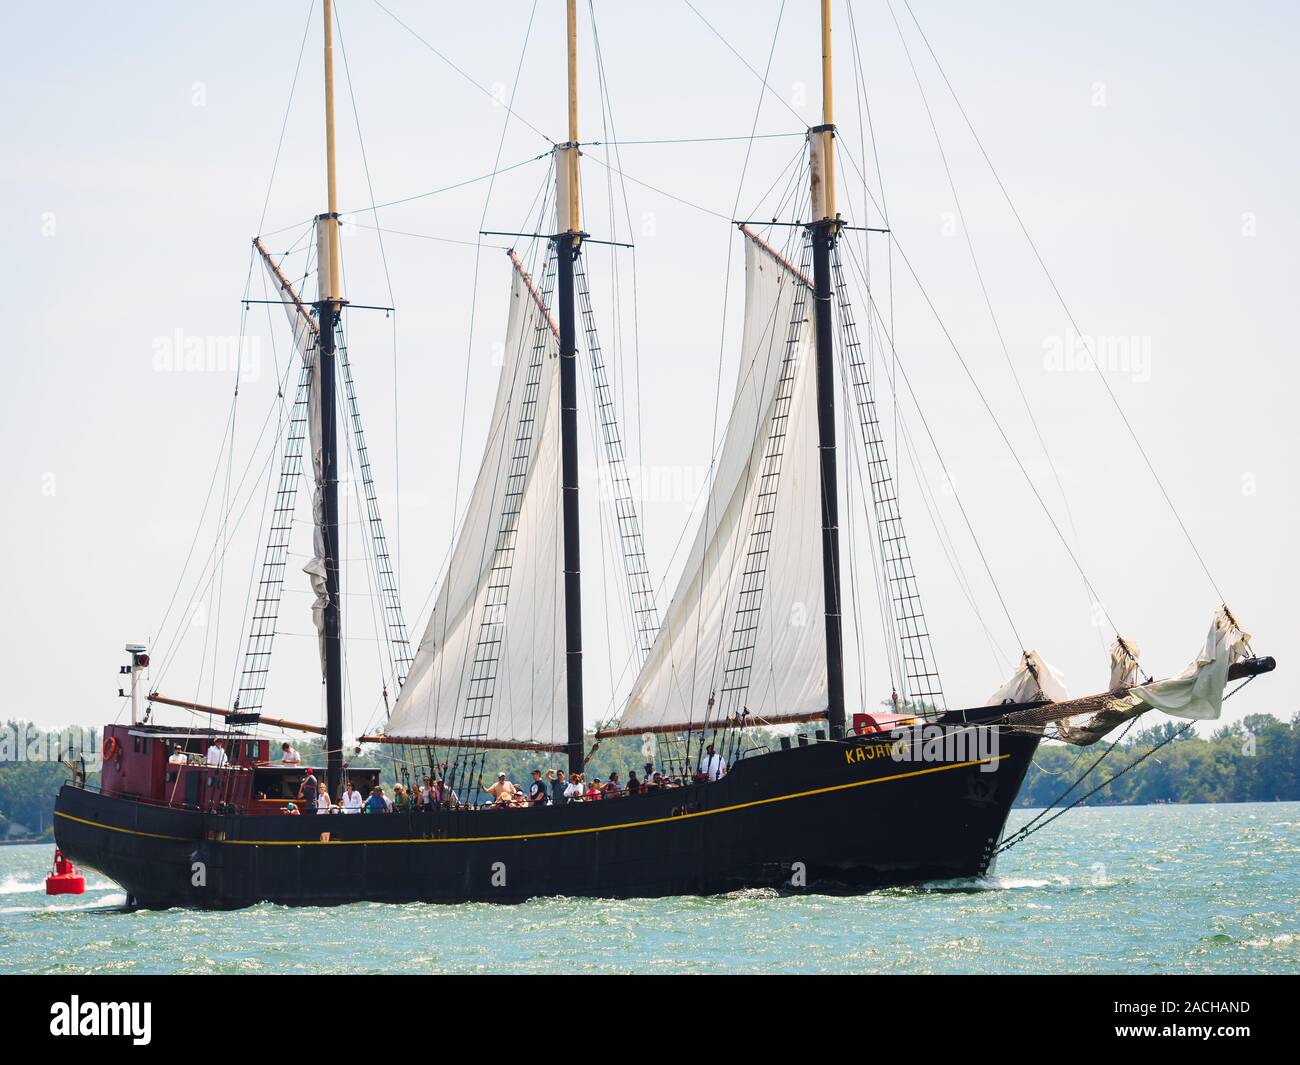 Three-masted tall ship Kajama schooner sailing on Lake Ontario, carrying passengers. Stock Photo